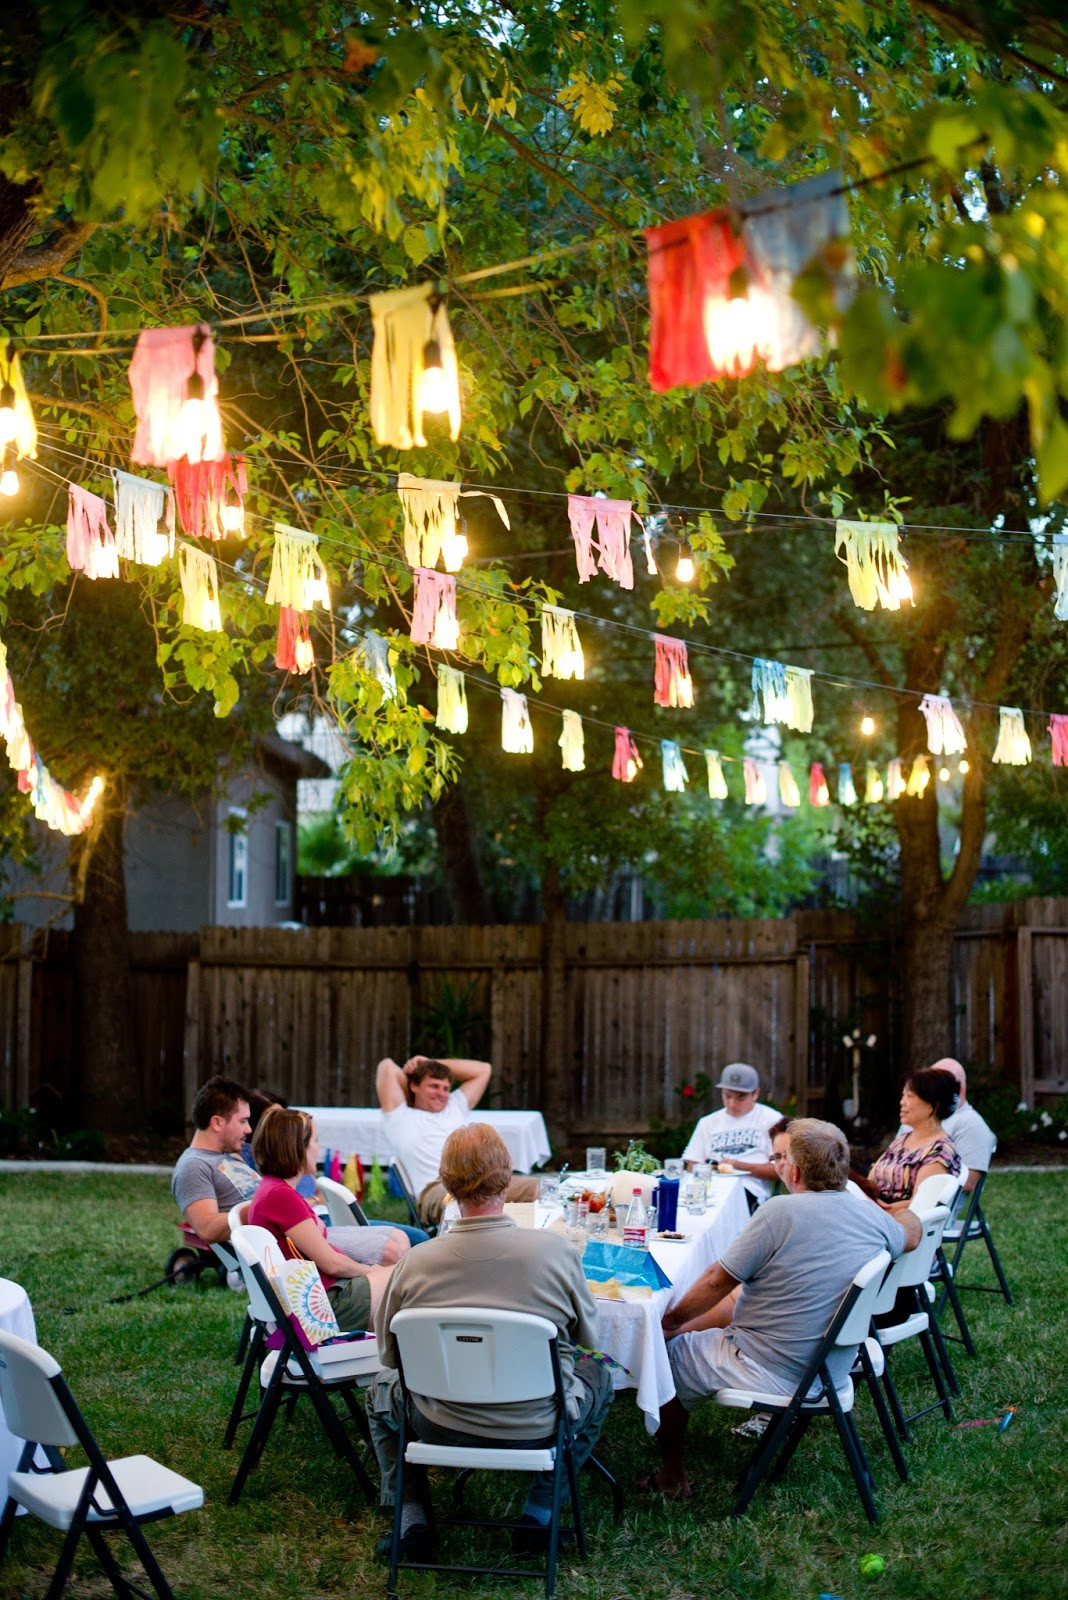 Backyard Party Decorating Ideas
 Domestic Fashionista Backyard Fall Celebration